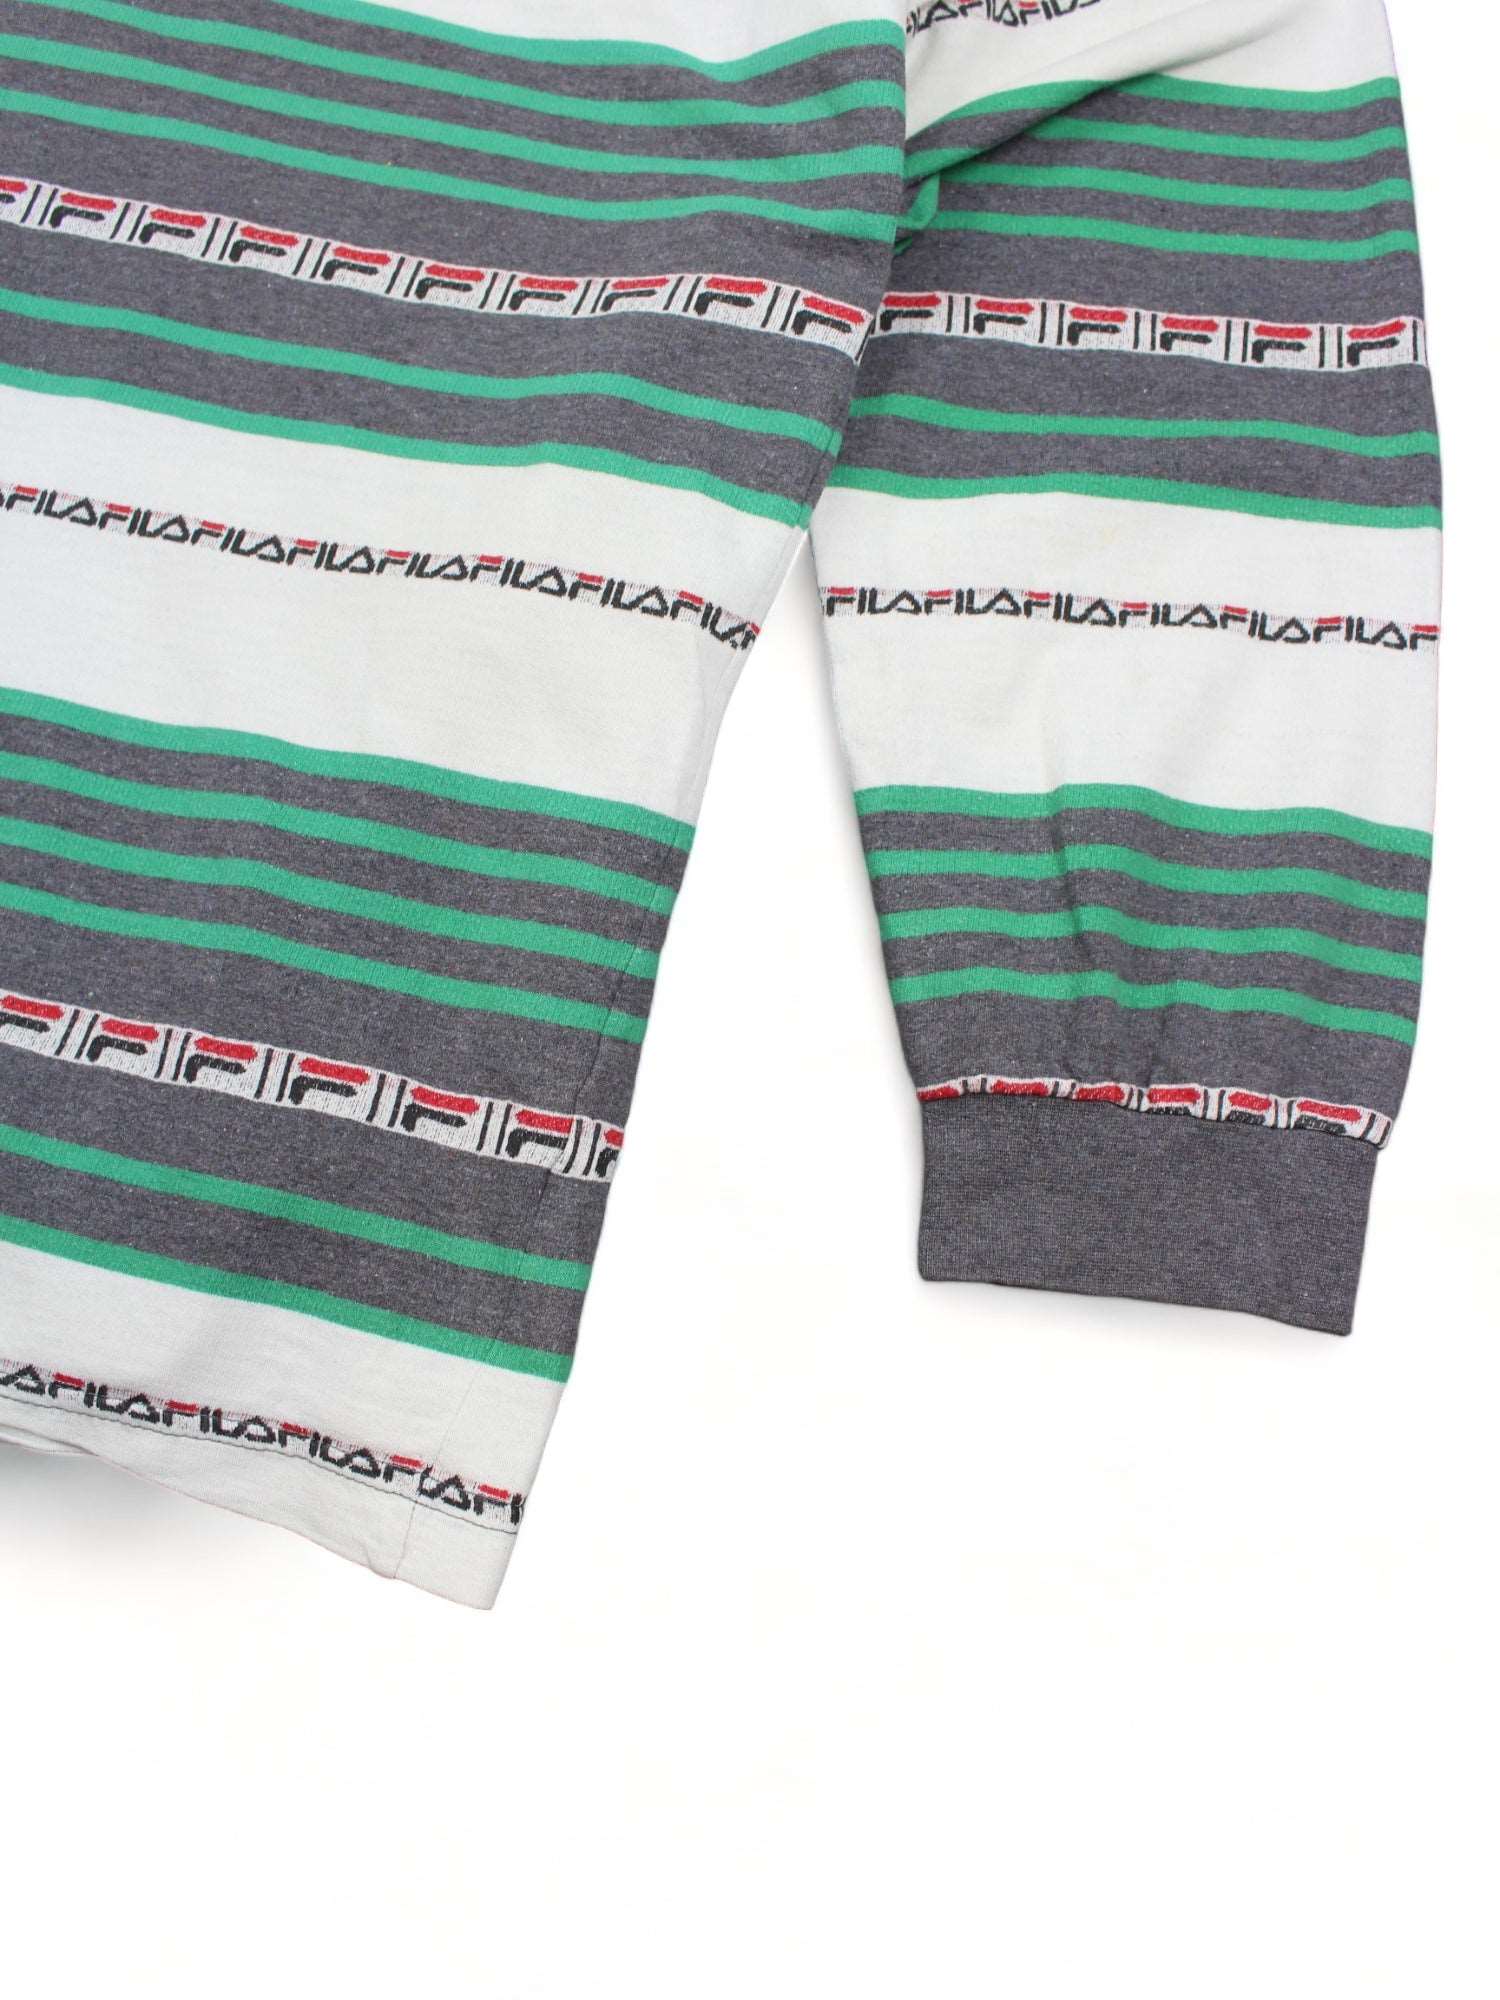 90s Fila Patterned Striped Polo Top (L) - Garm Shack